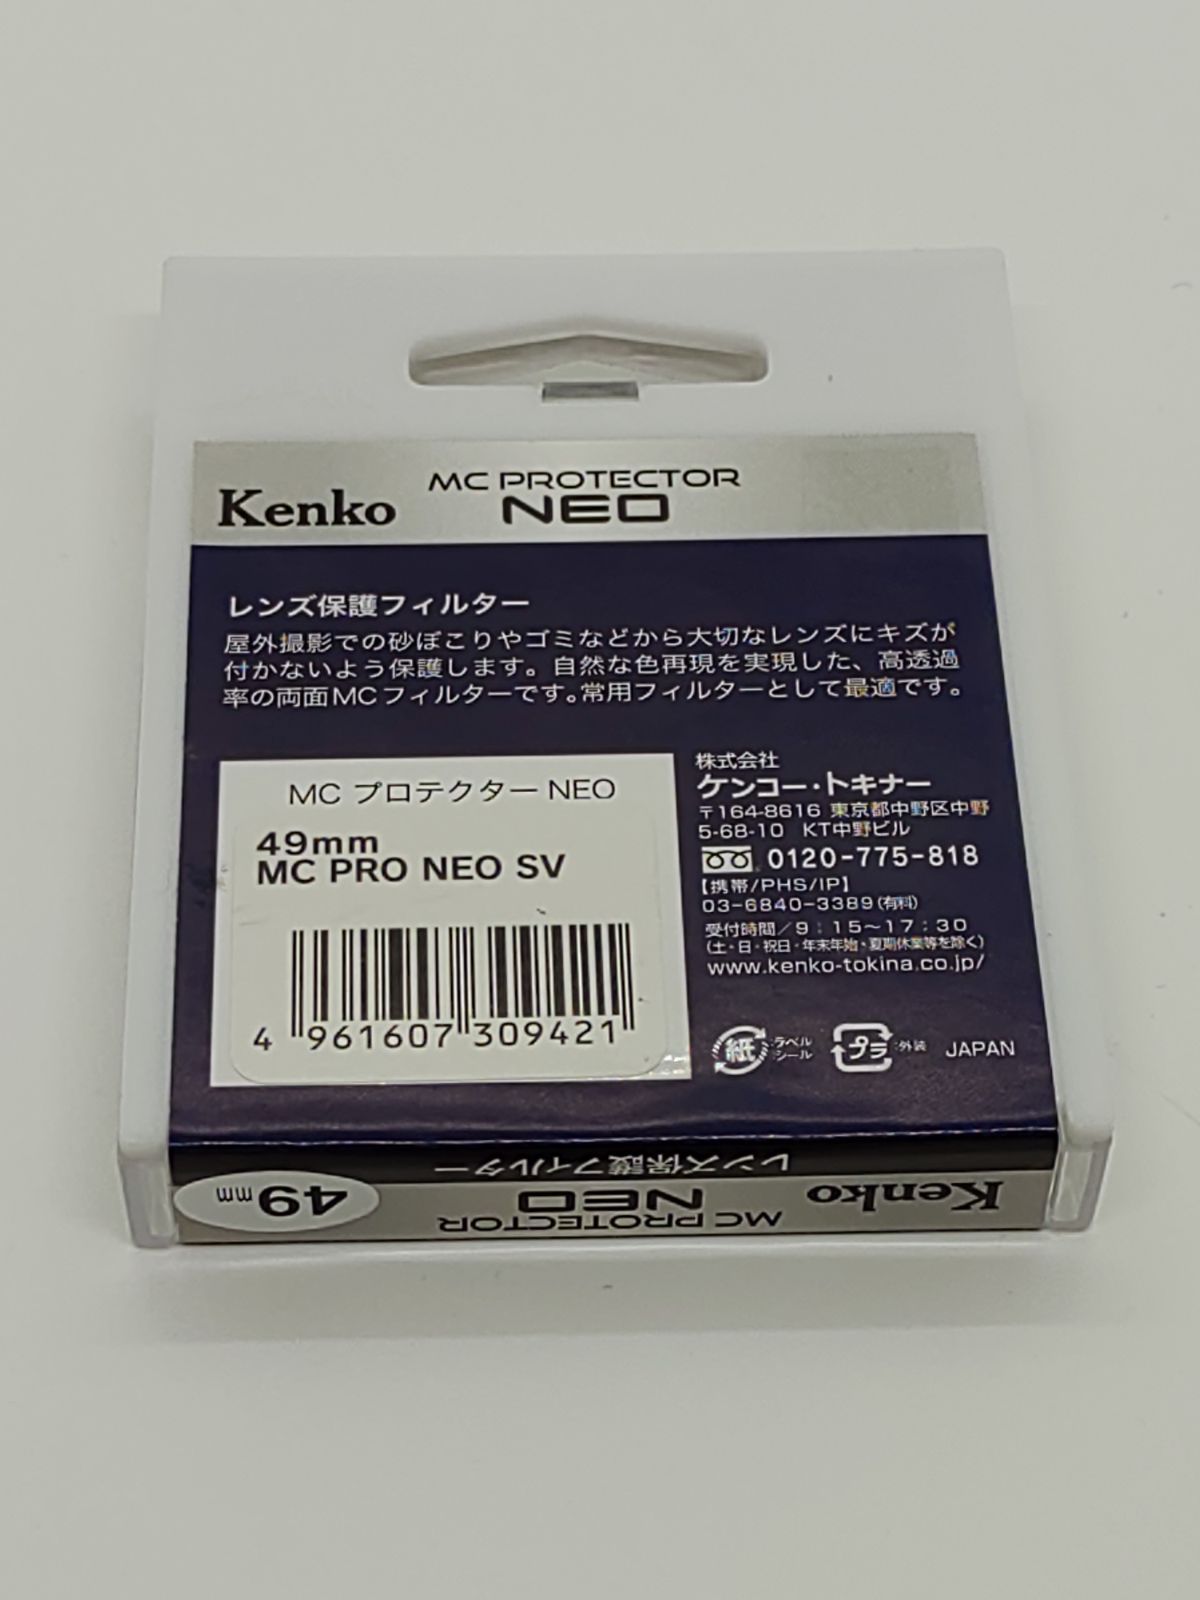 Kenko MCプロテクター NEO 49mm その他 | alirsyadsatya.sch.id